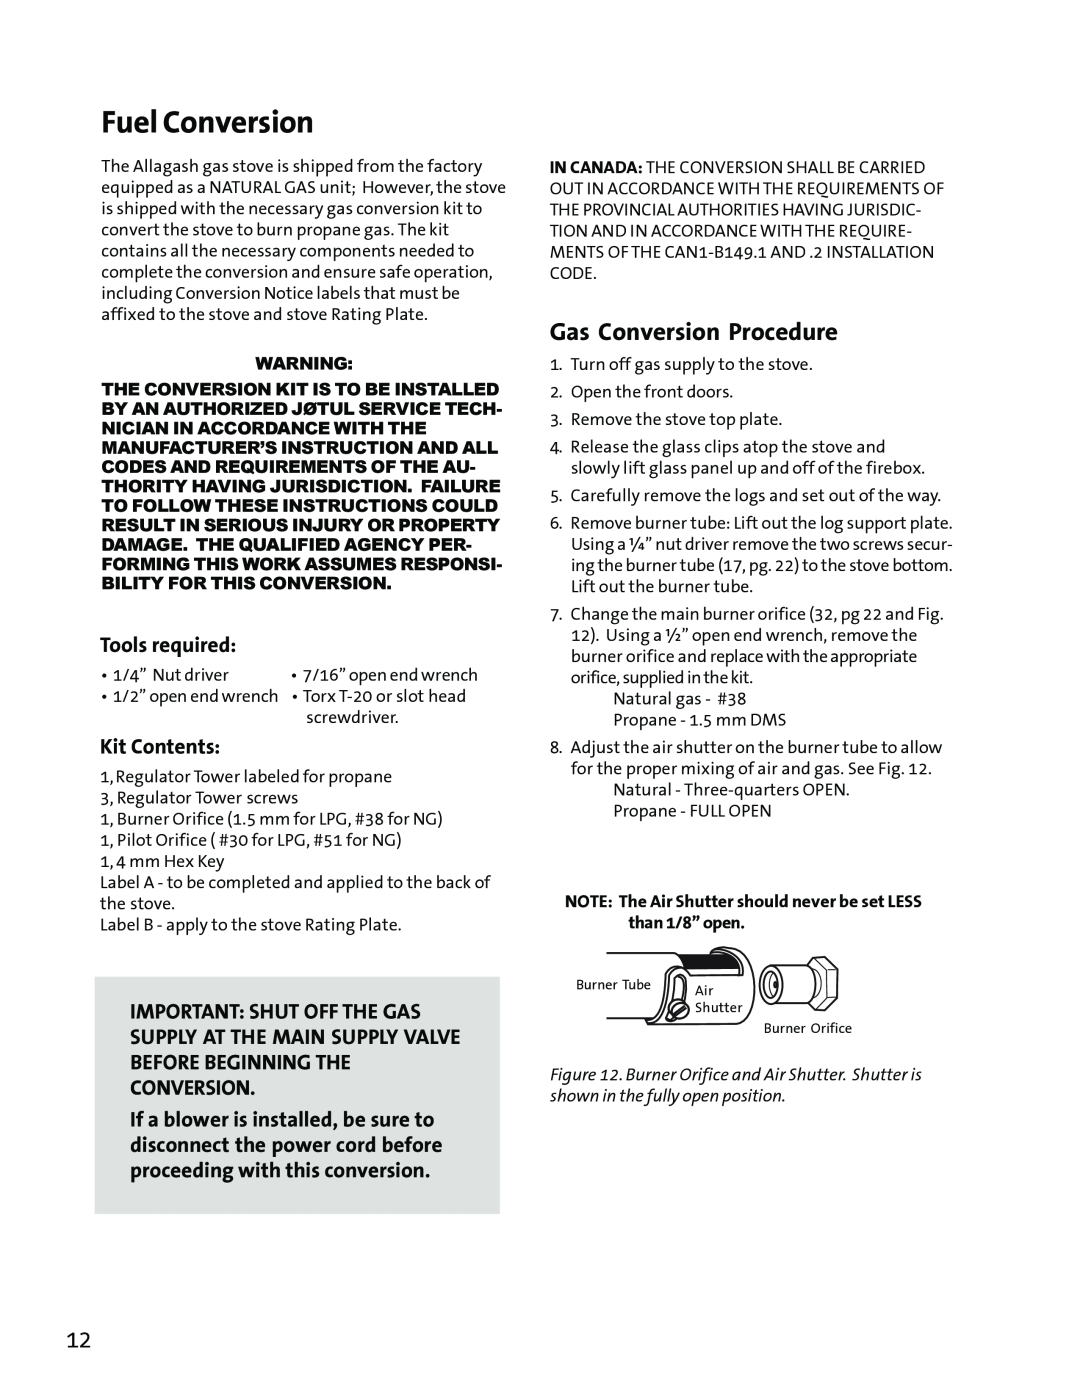 Jotul GF3 DVII manual Fuel Conversion, Gas Conversion Procedure, Tools required, Kit Contents 